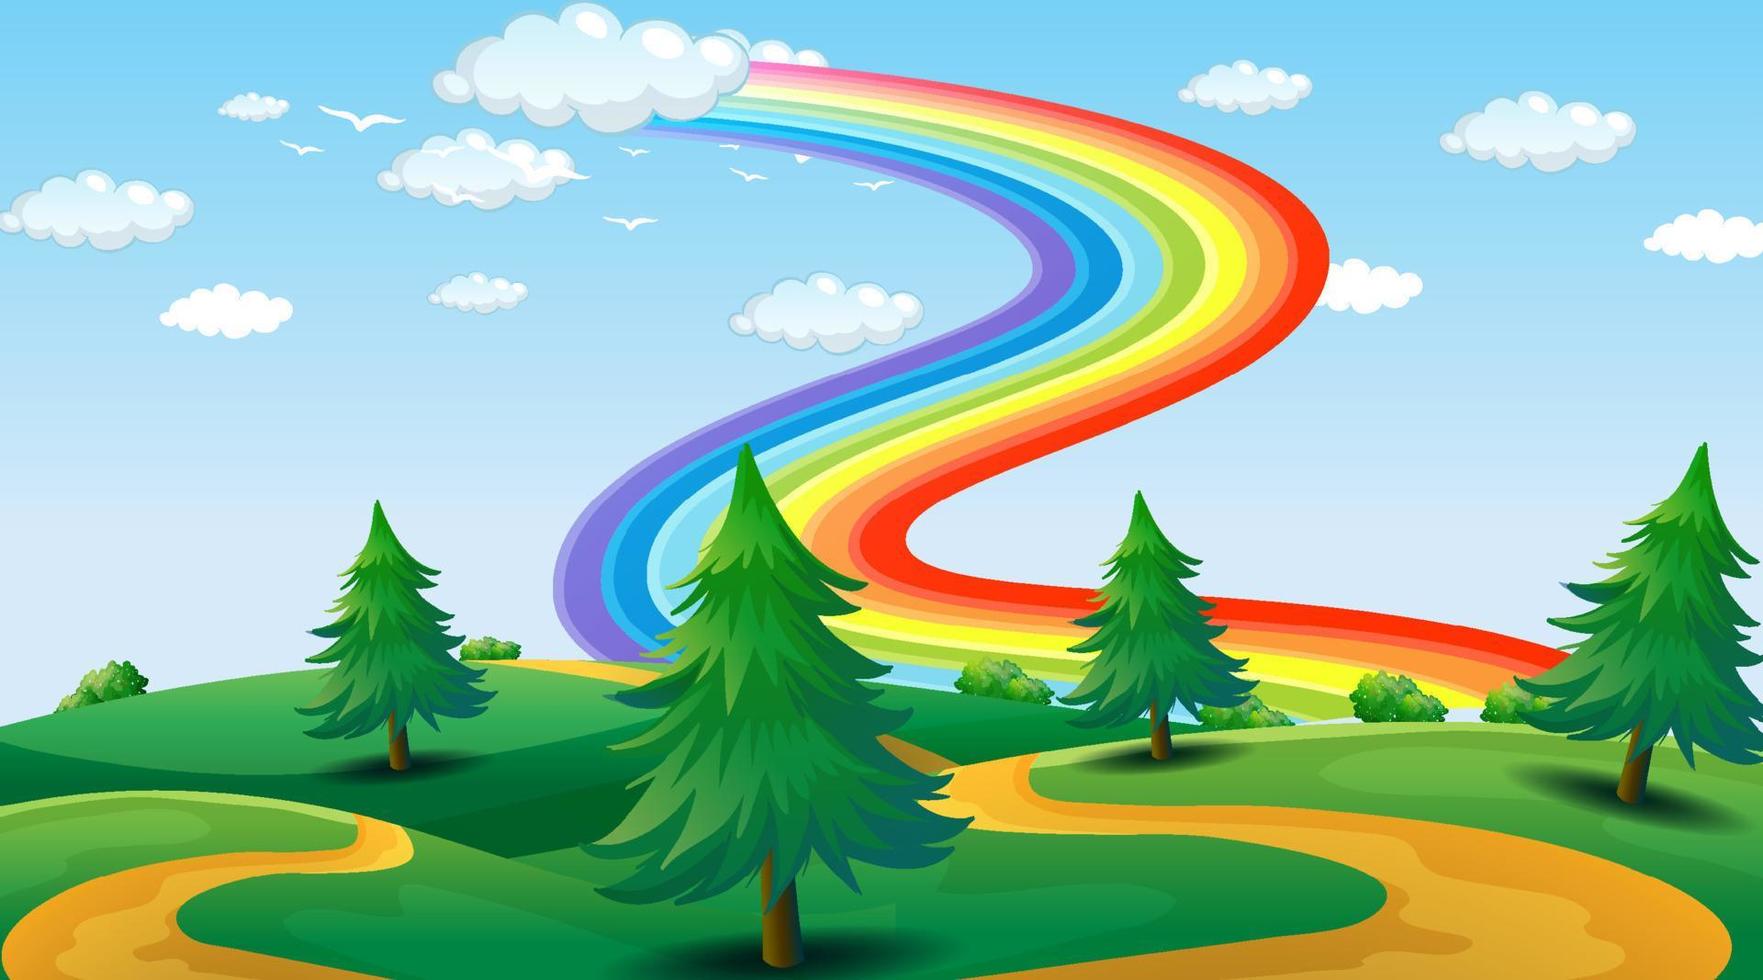 Parklandschaftsszene mit Regenbogen am Himmel vektor